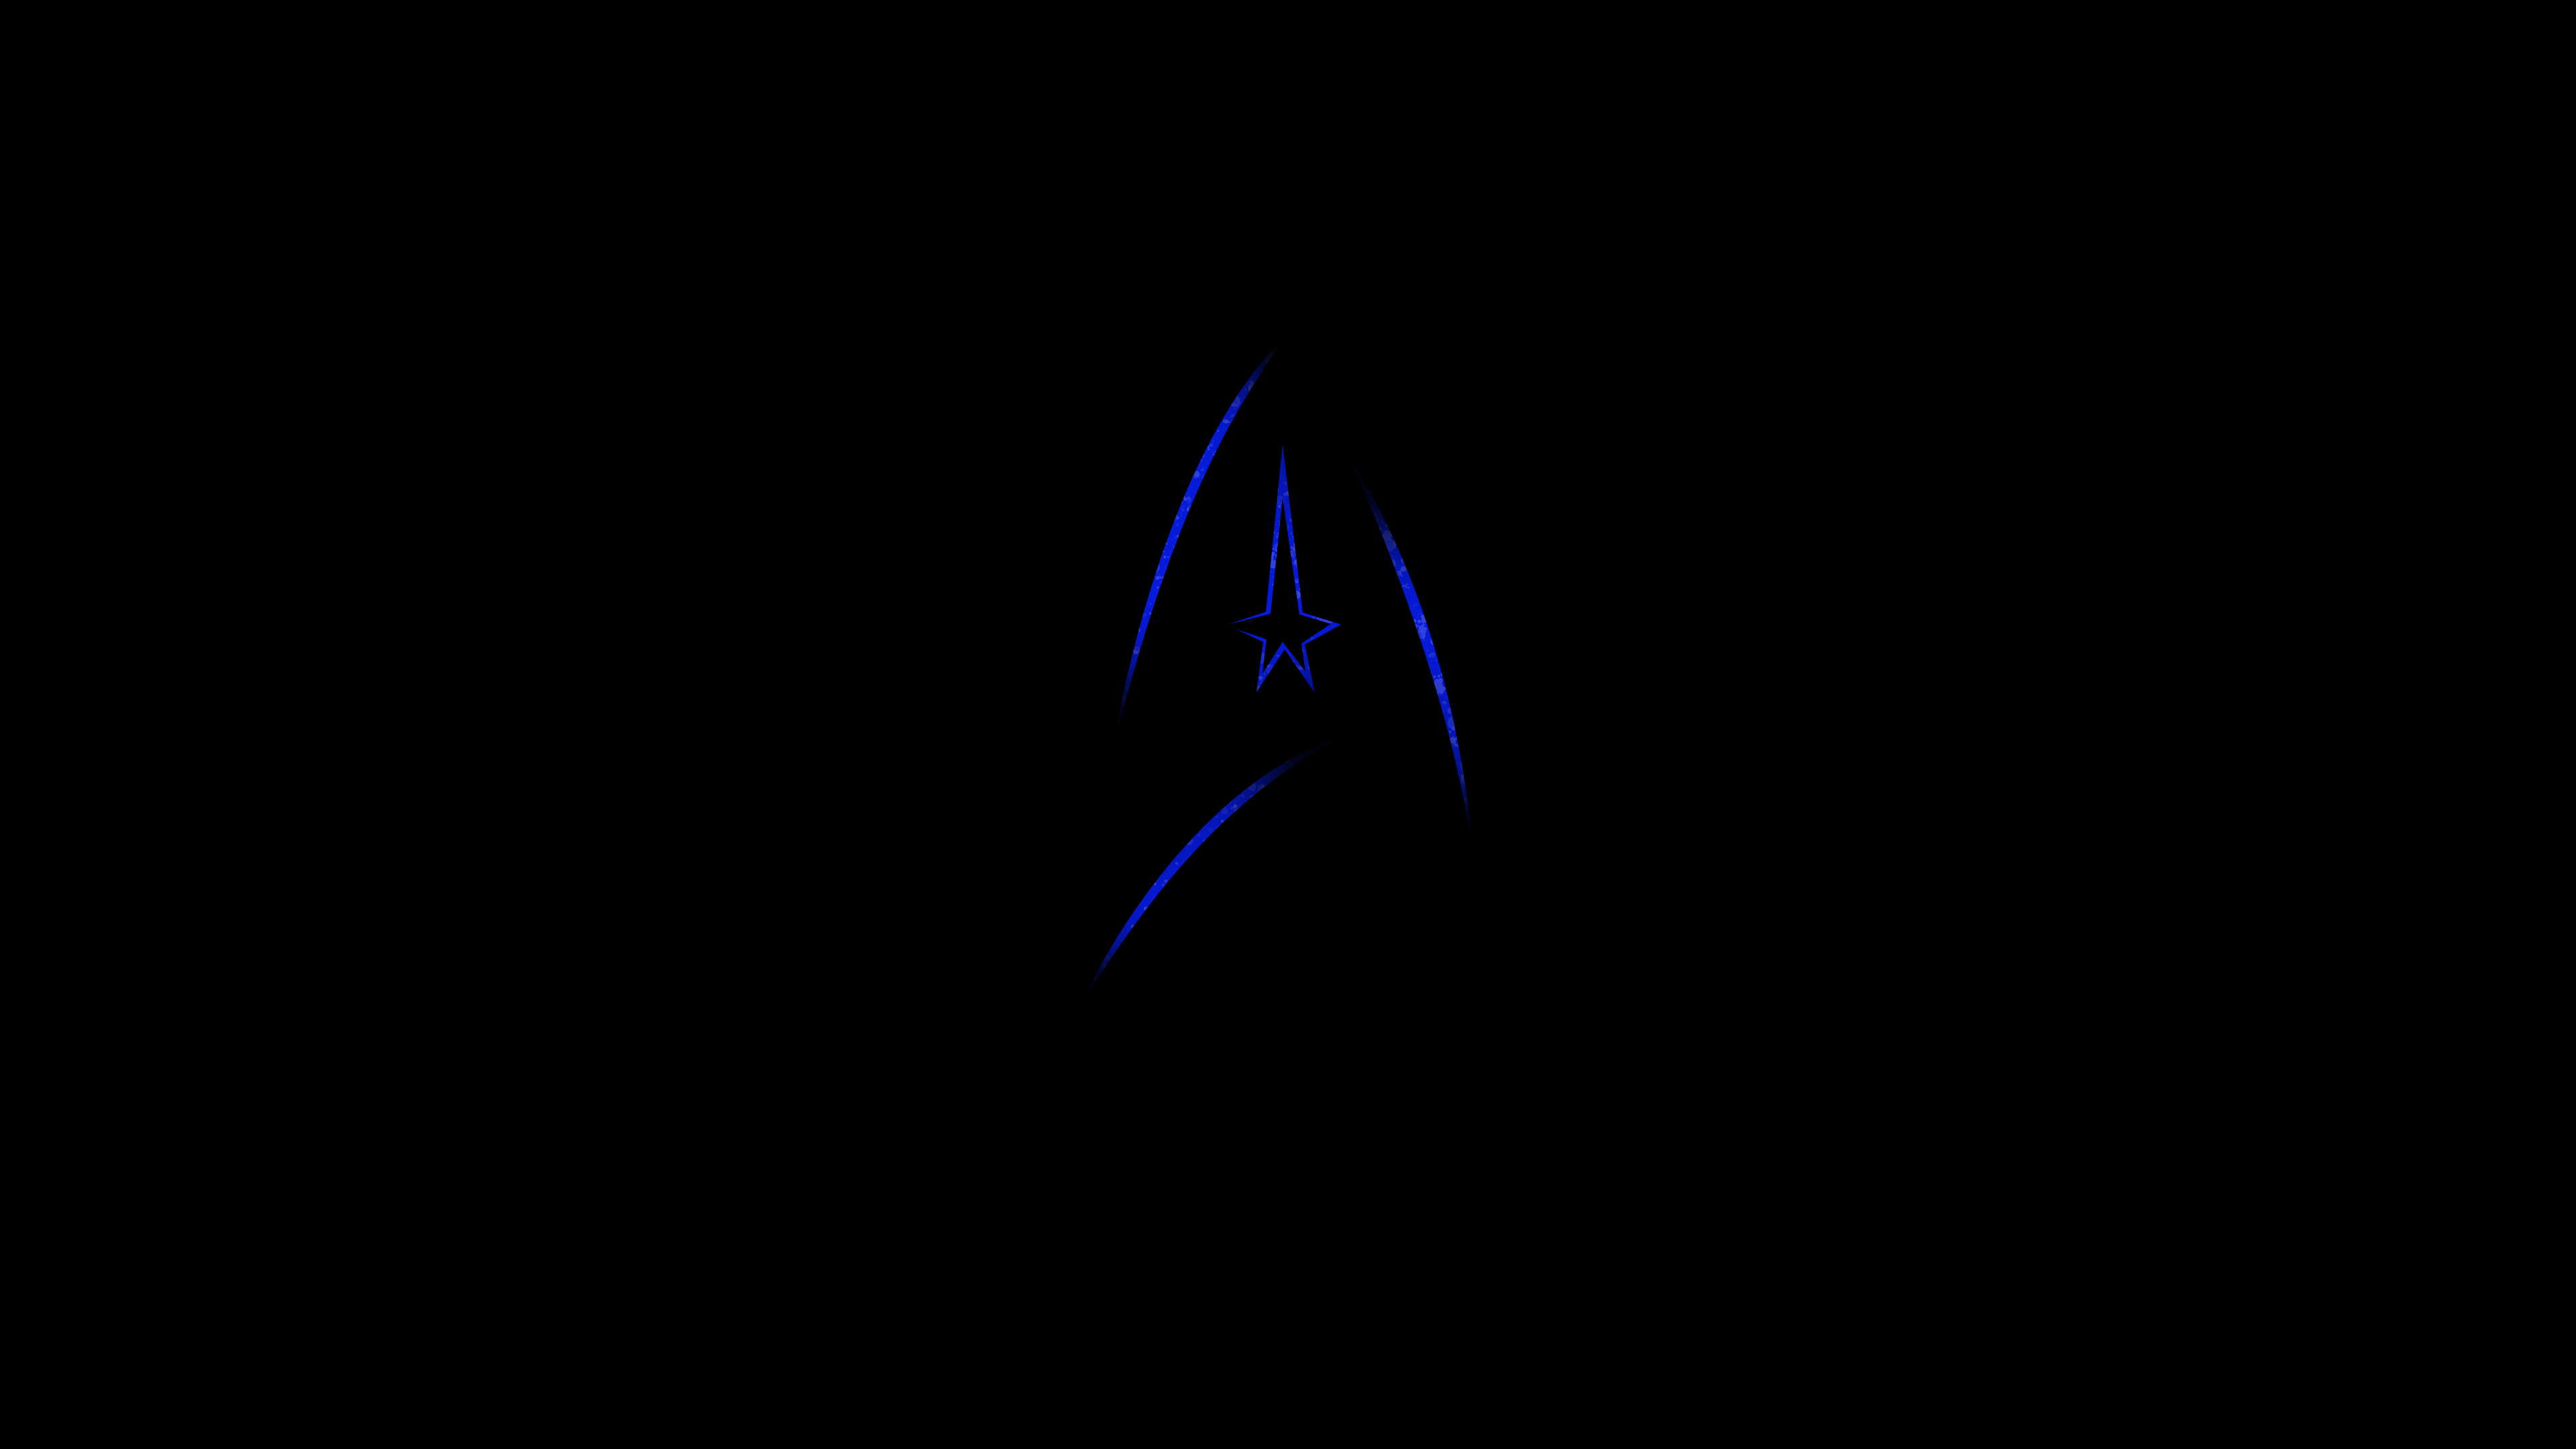 General 3840x2160 Star Trek fictional science fiction logo minimalism TV series movies simple background black background